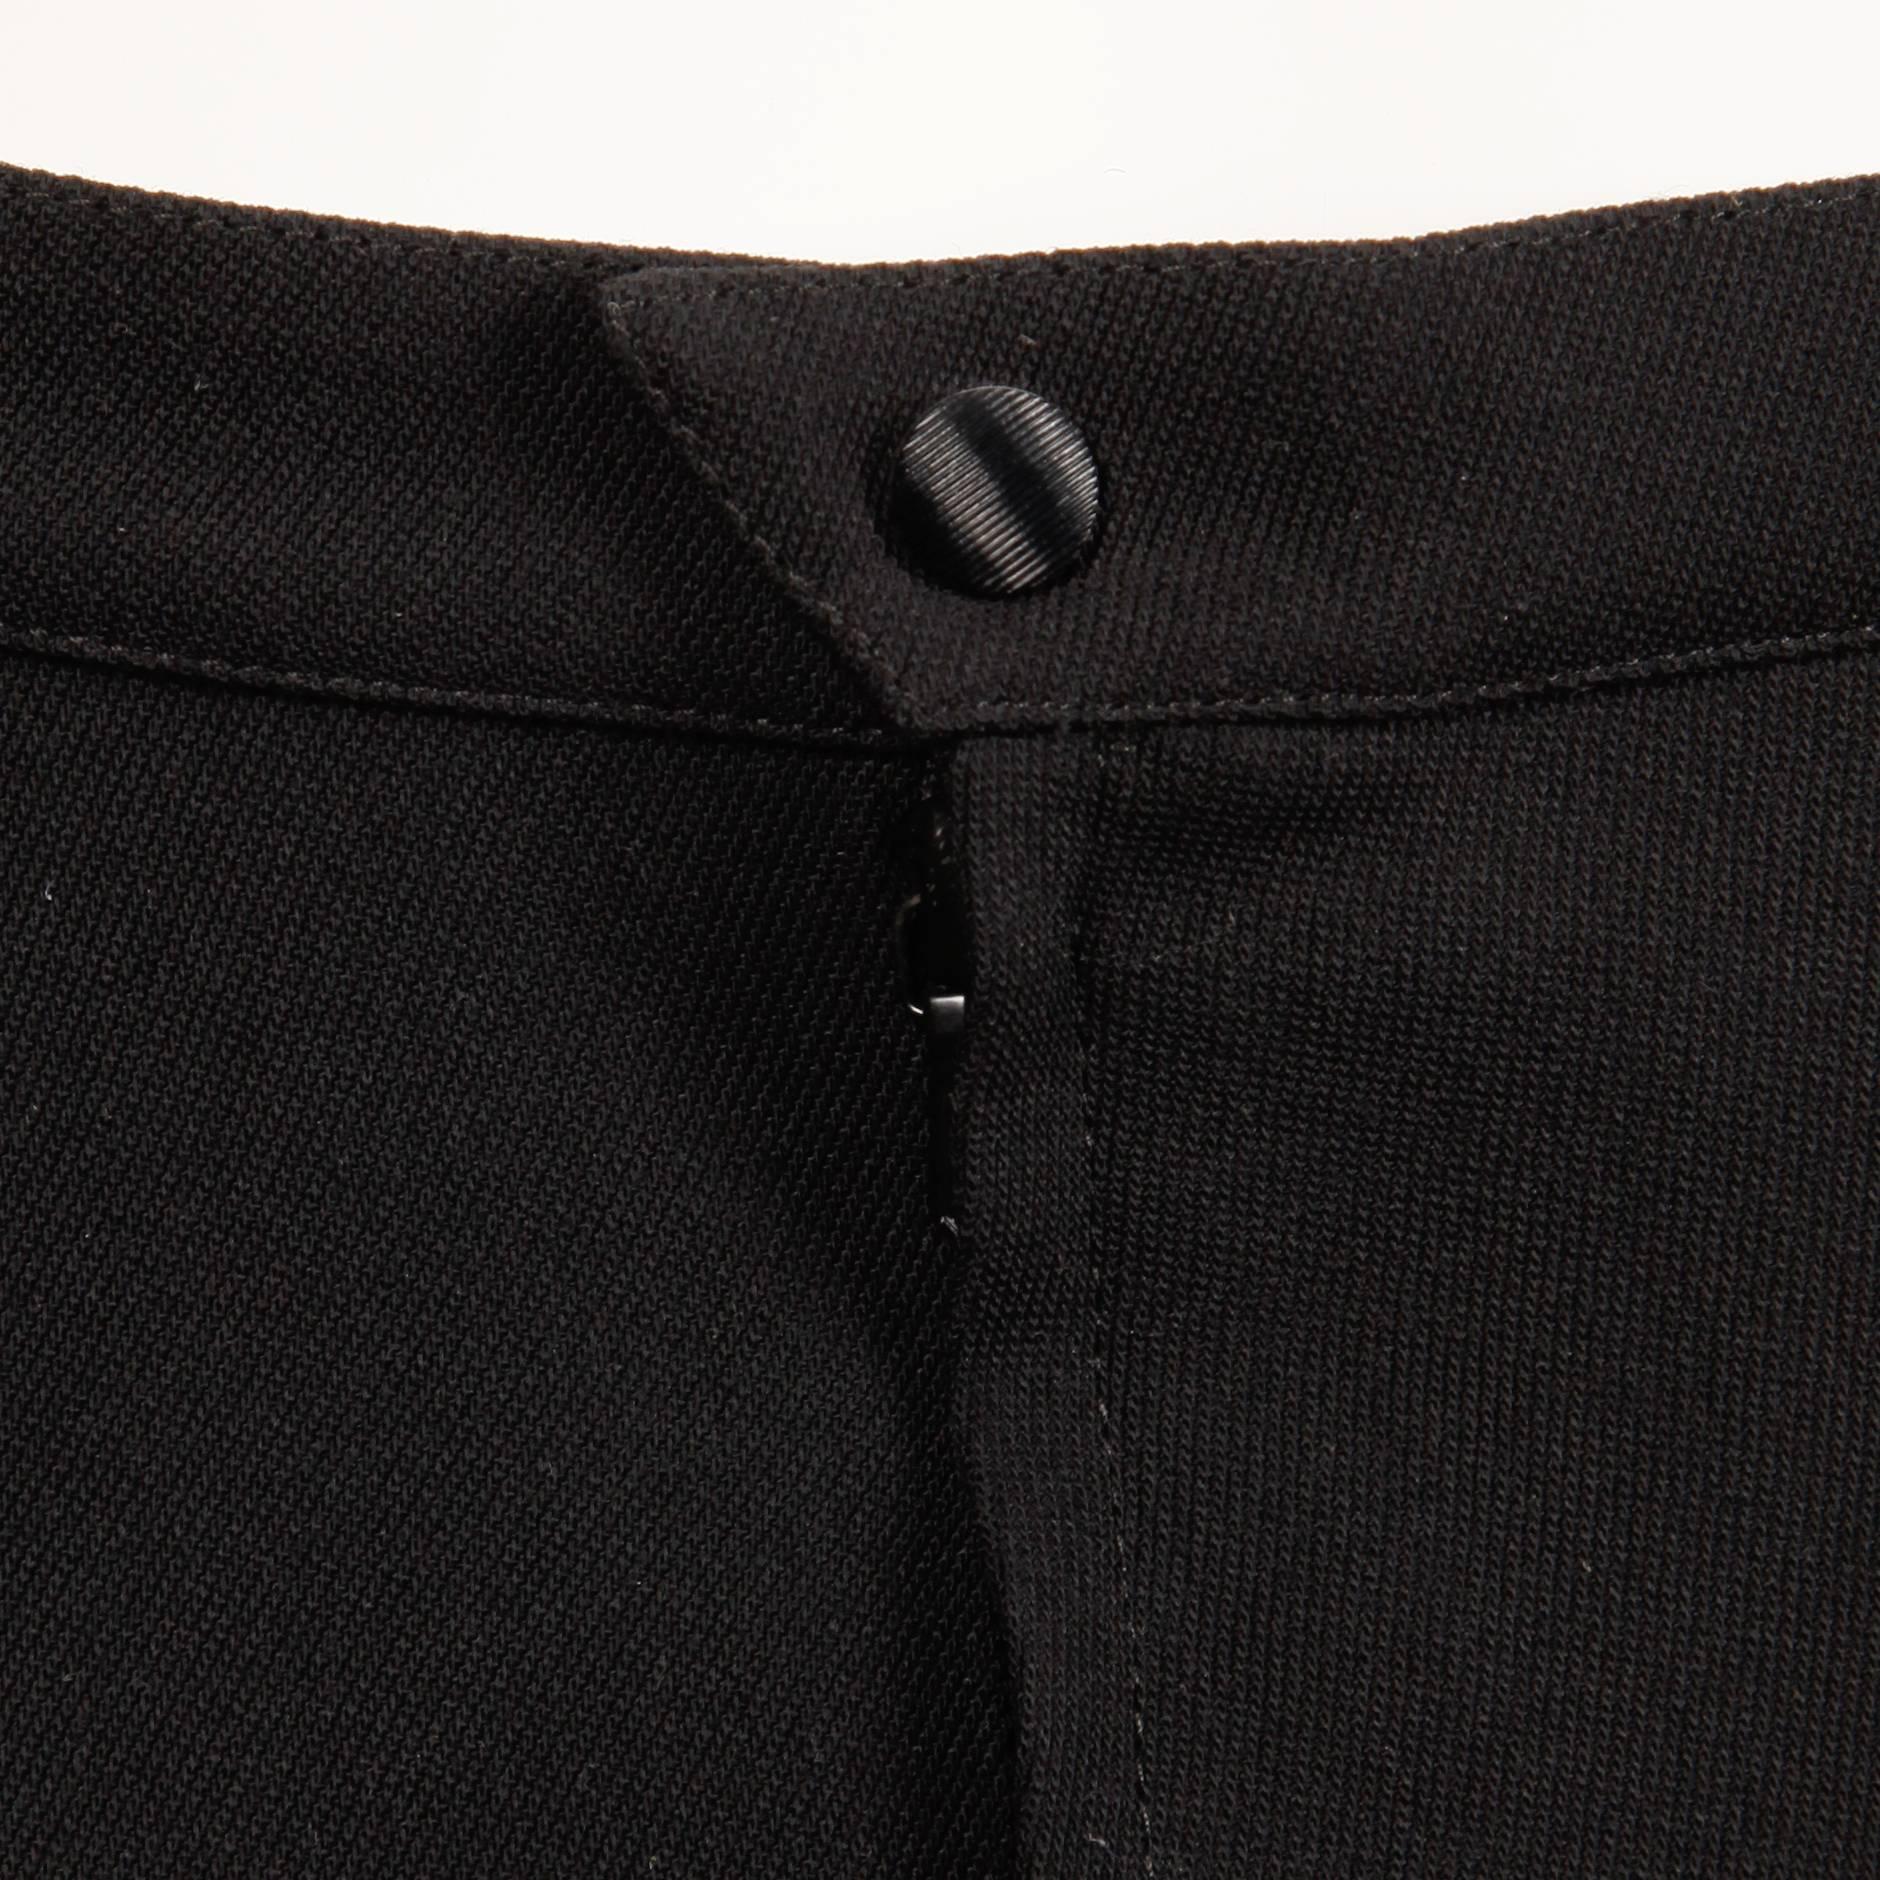 1980s Thierry Mugler Vintage Black Wool Jacket + Skirt Suit 2-Pc Ensemble 1